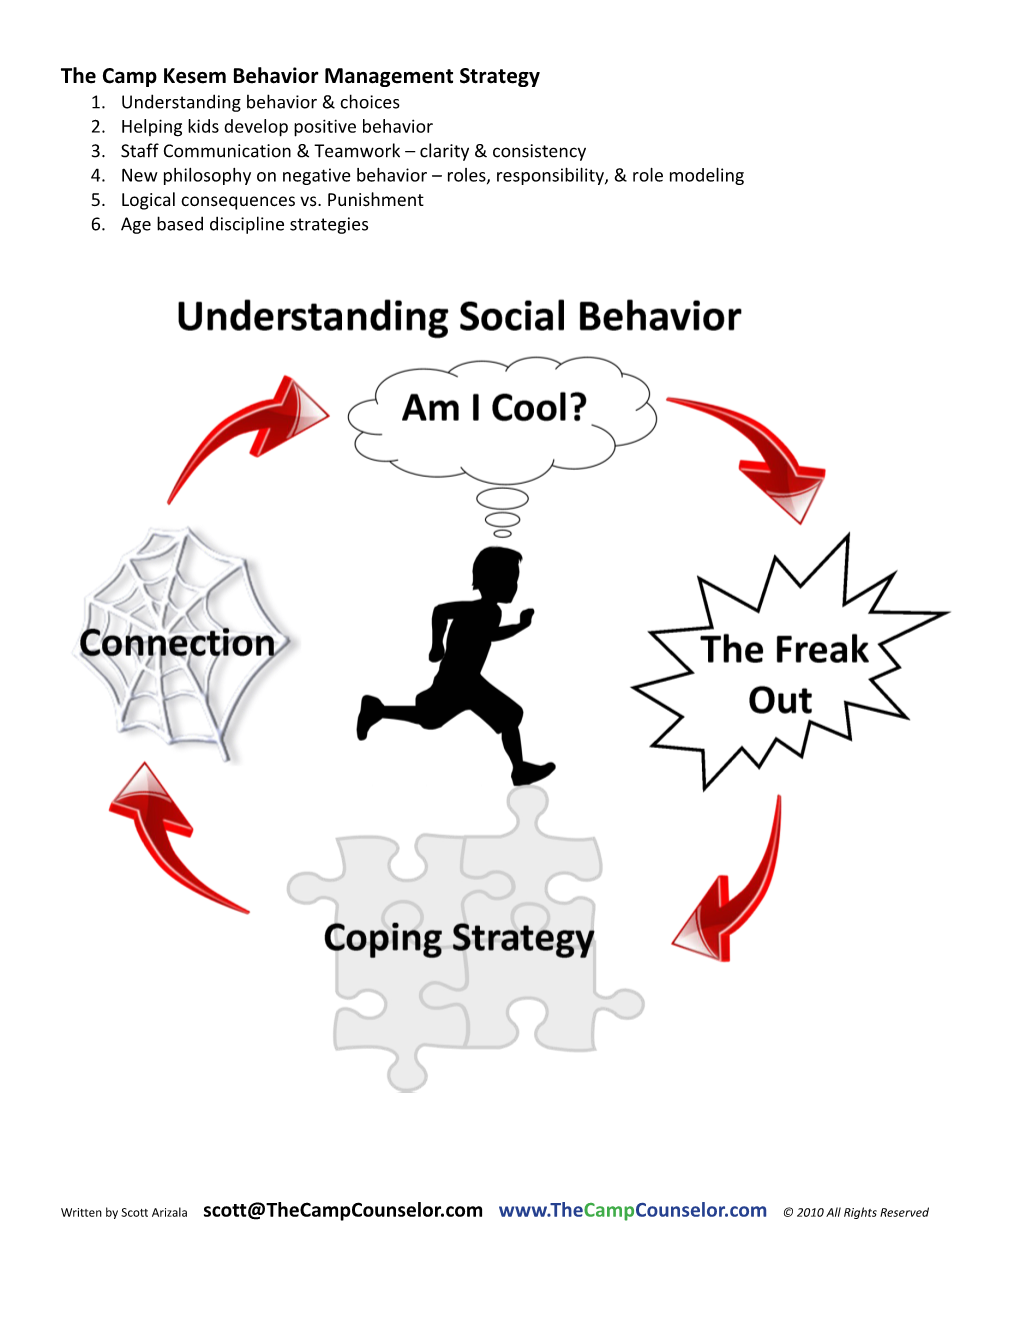 The Camp Kesem Behavior Management Strategy